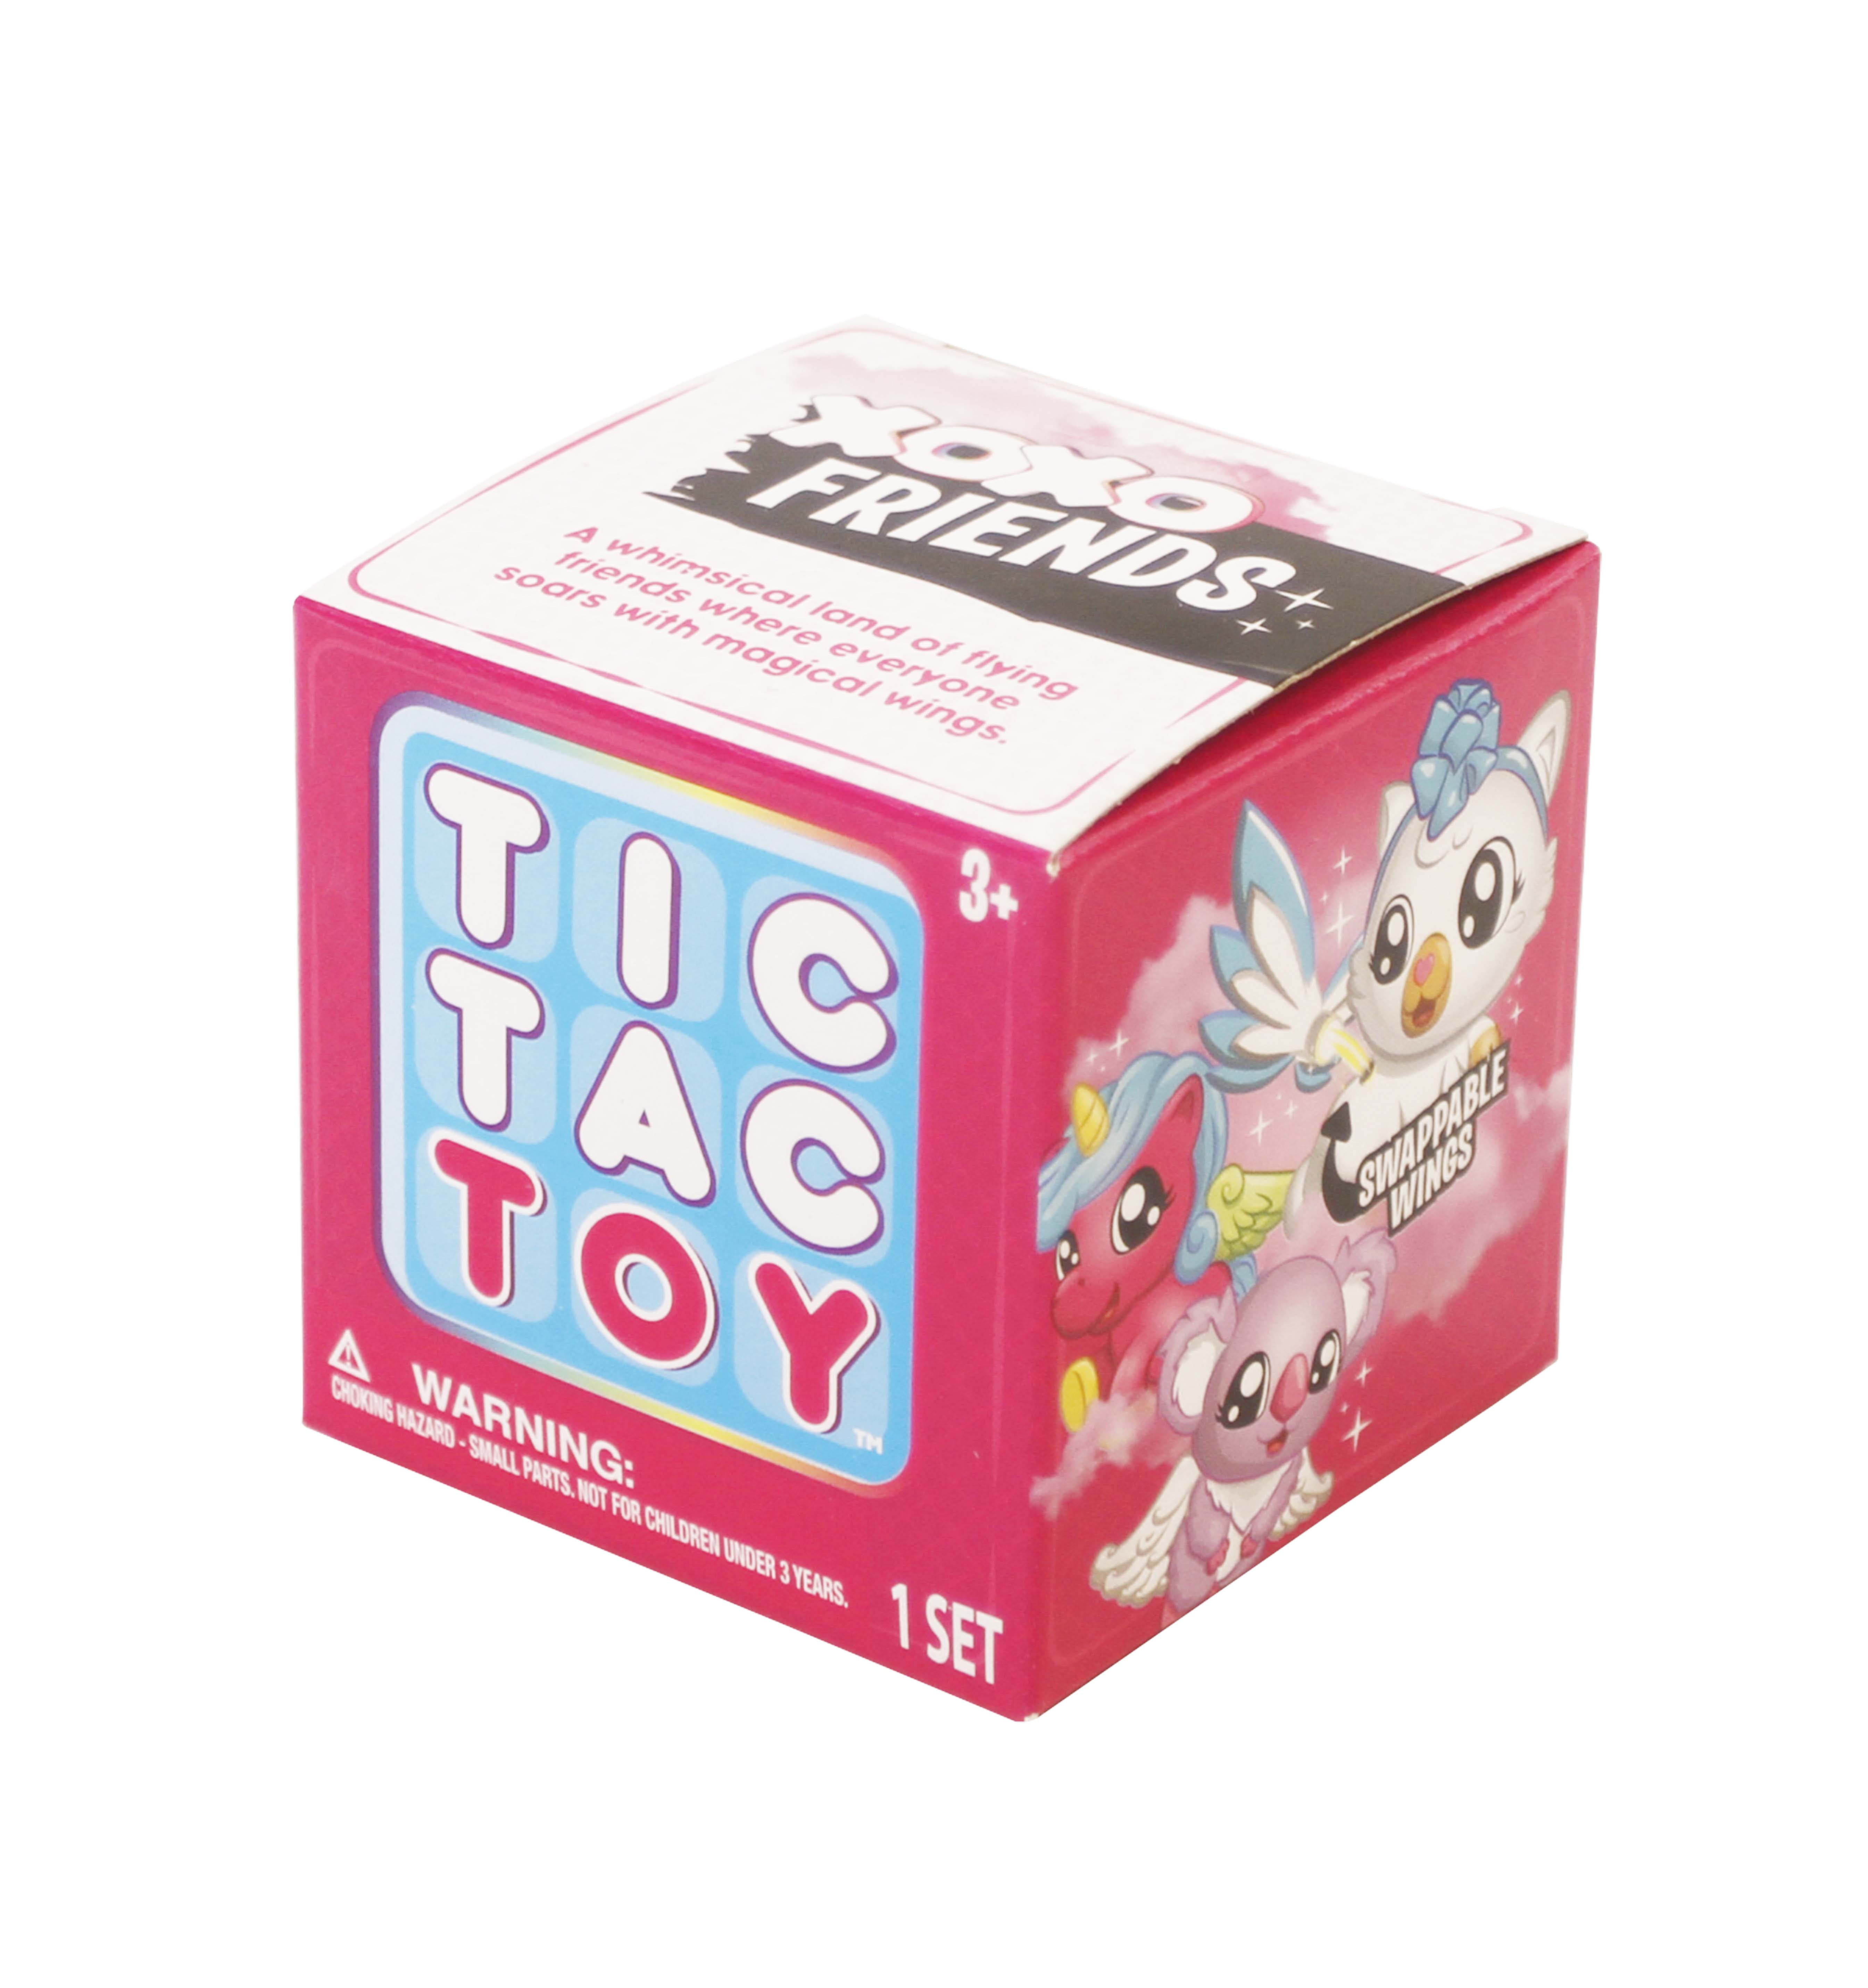 Blip Toys Tic Tac Toy XOXO Friends 3 Surprise Boxes for sale online 